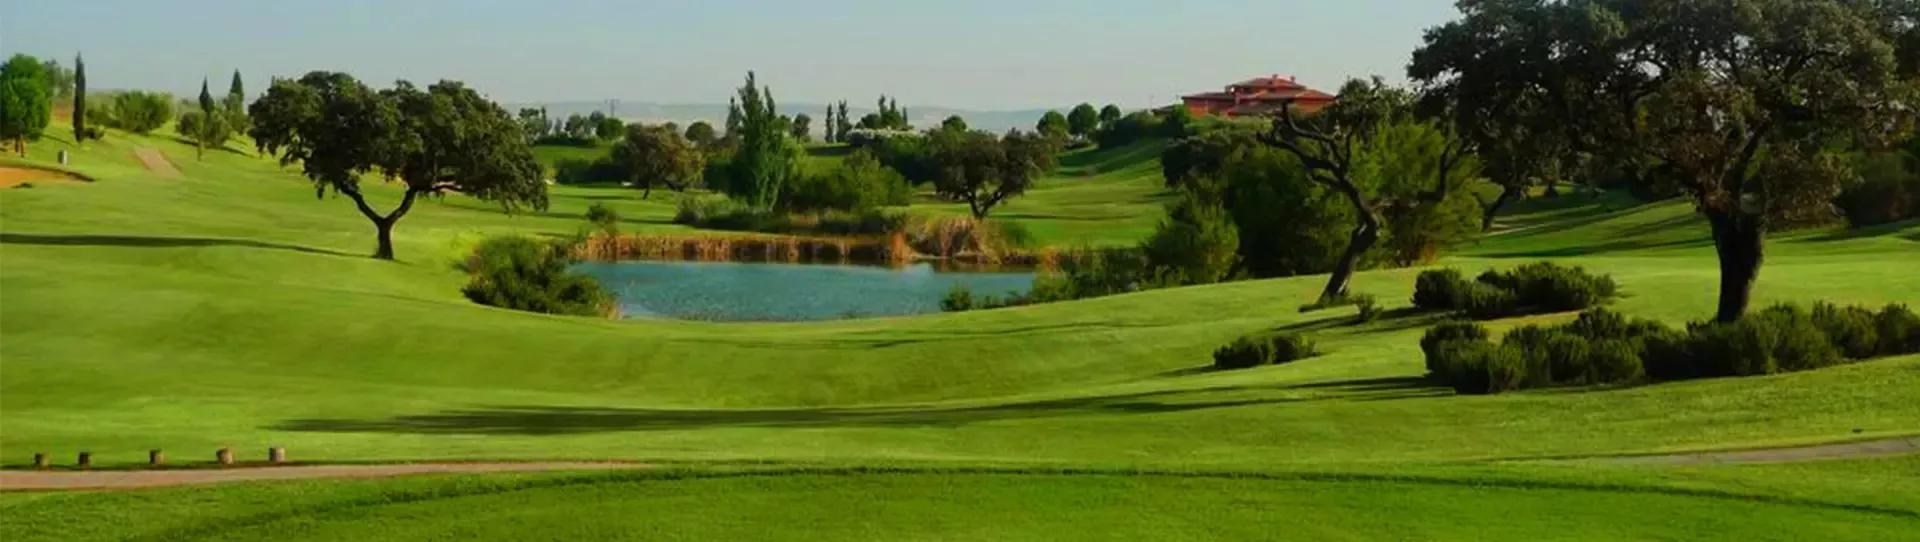 Spain golf courses - Hato Verde Club de Golf - Photo 1